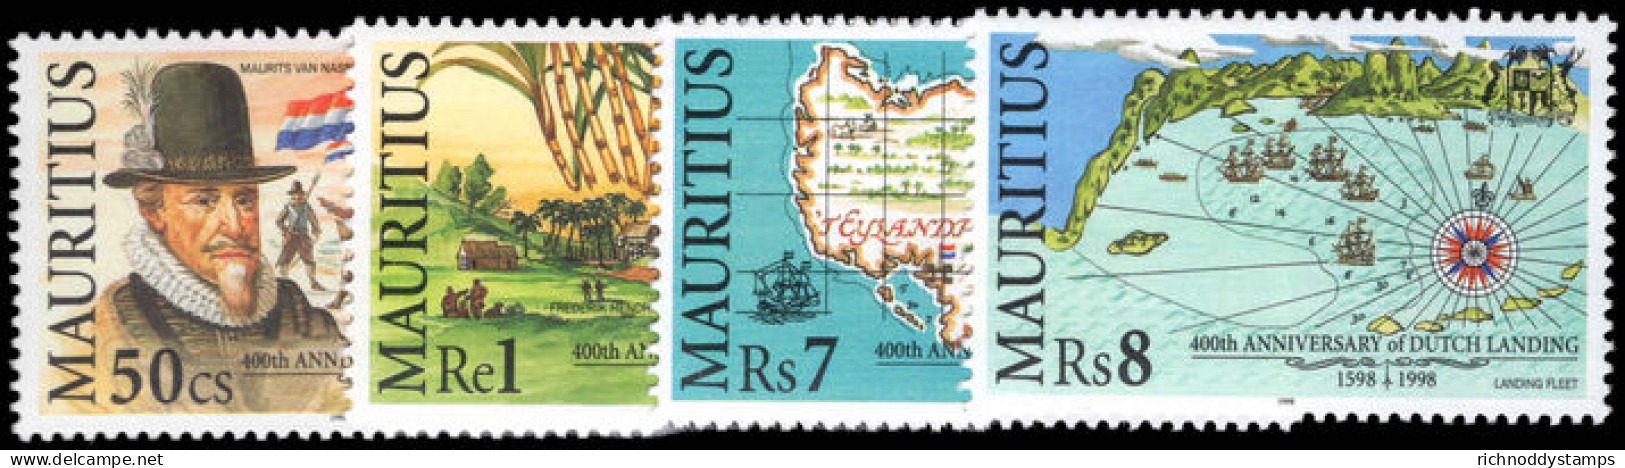 Mauritius 1998 40th Anniv Of Dutch Landing On Mauritius Unmounted Mint. - Mauritius (1968-...)